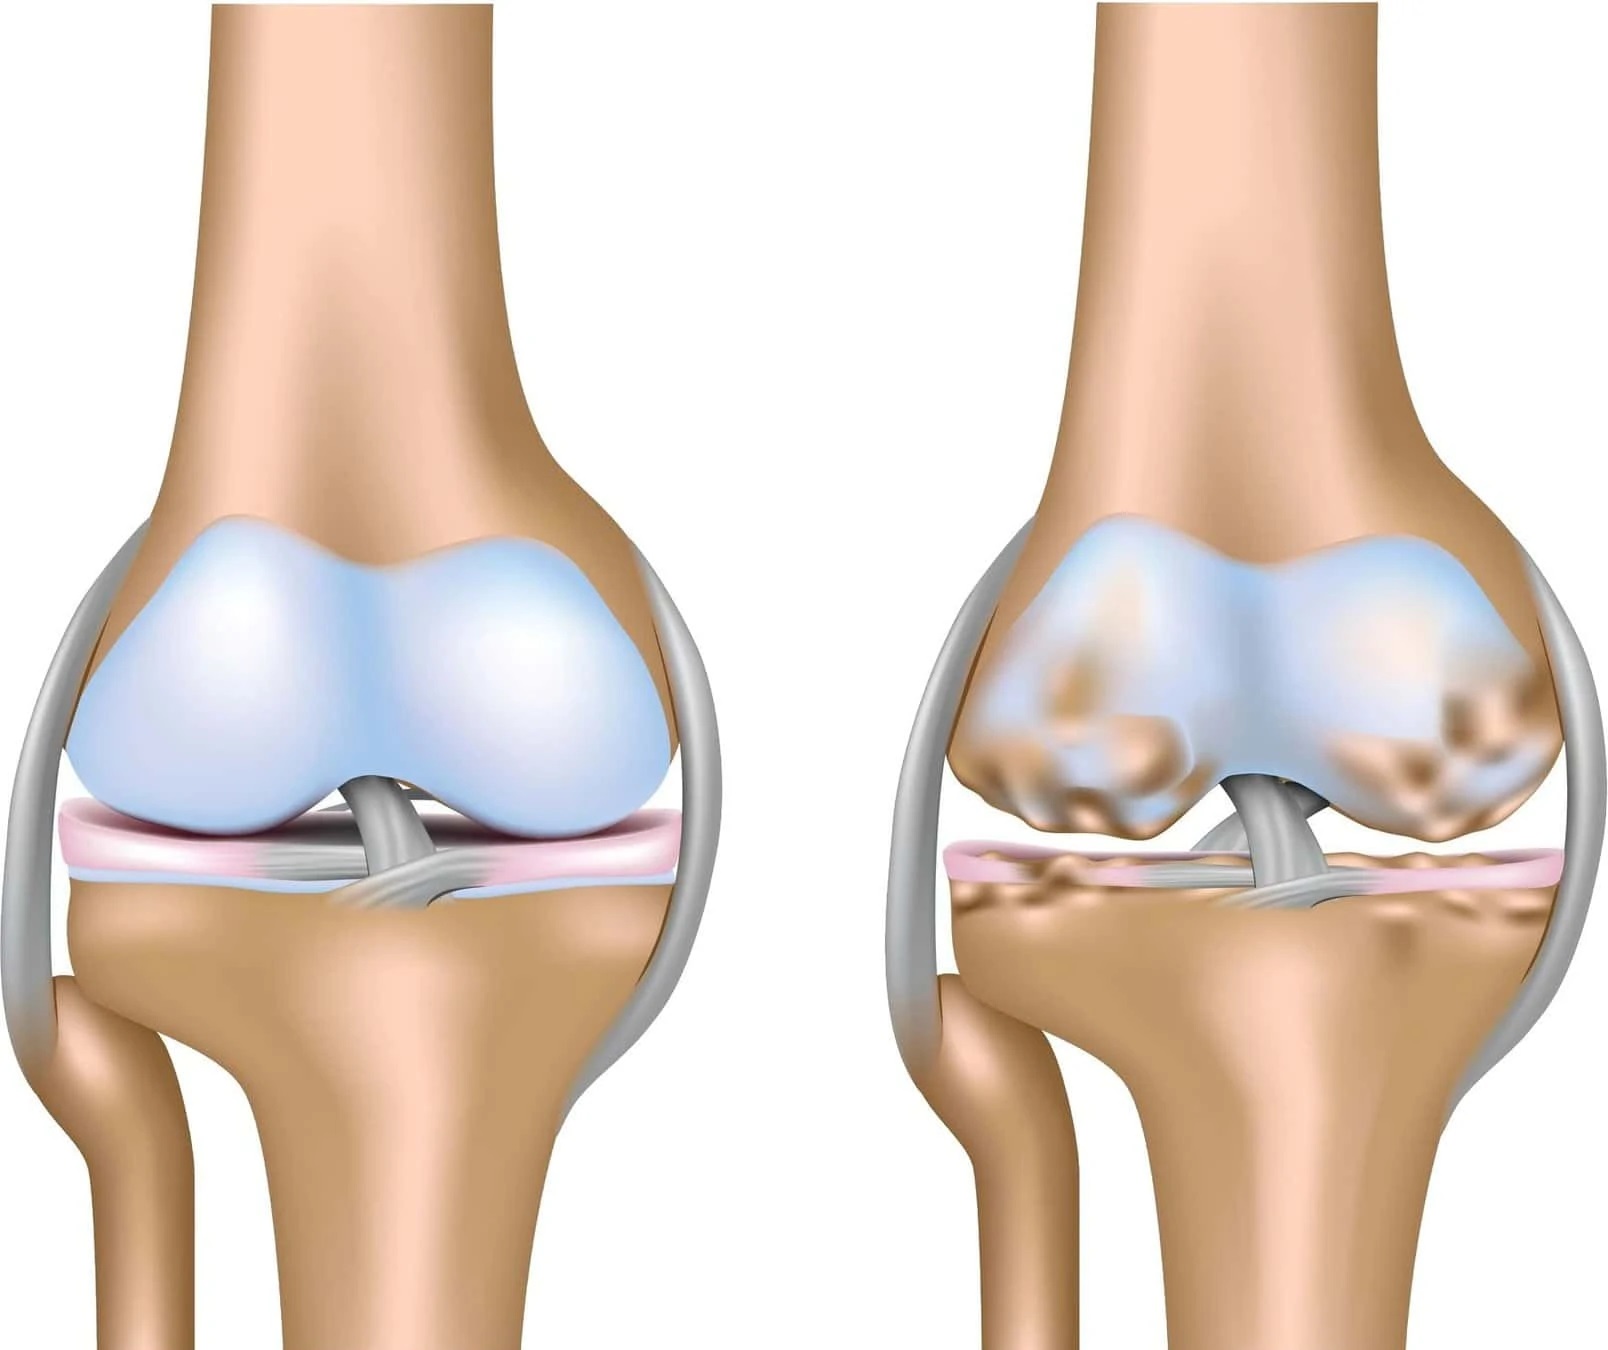 Gonartroza - osteoartrita genunchiului